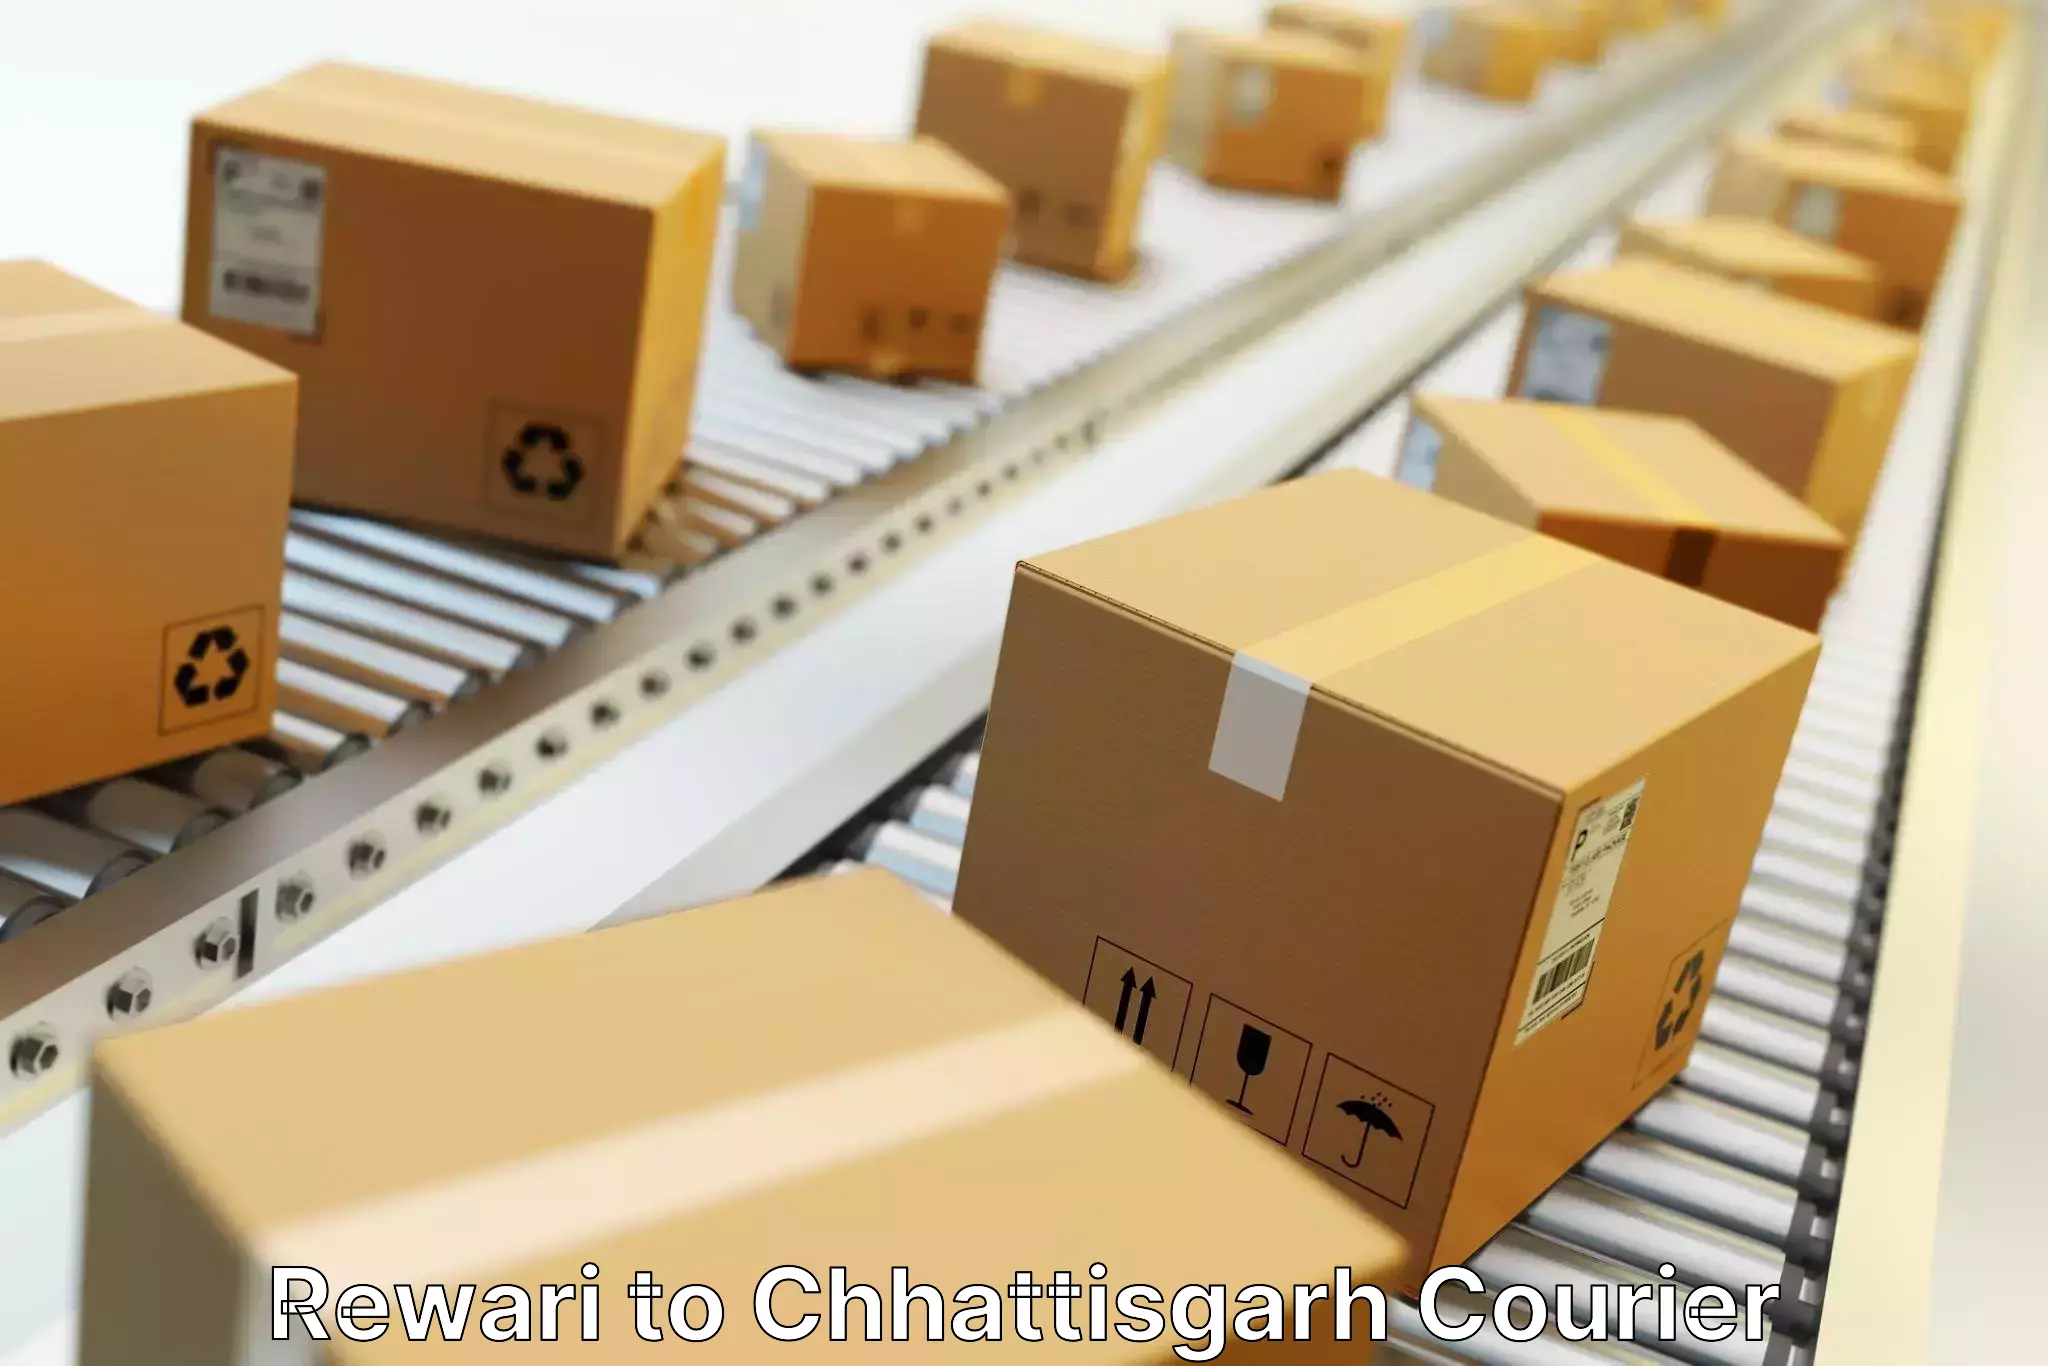 State-of-the-art courier technology Rewari to Chhattisgarh